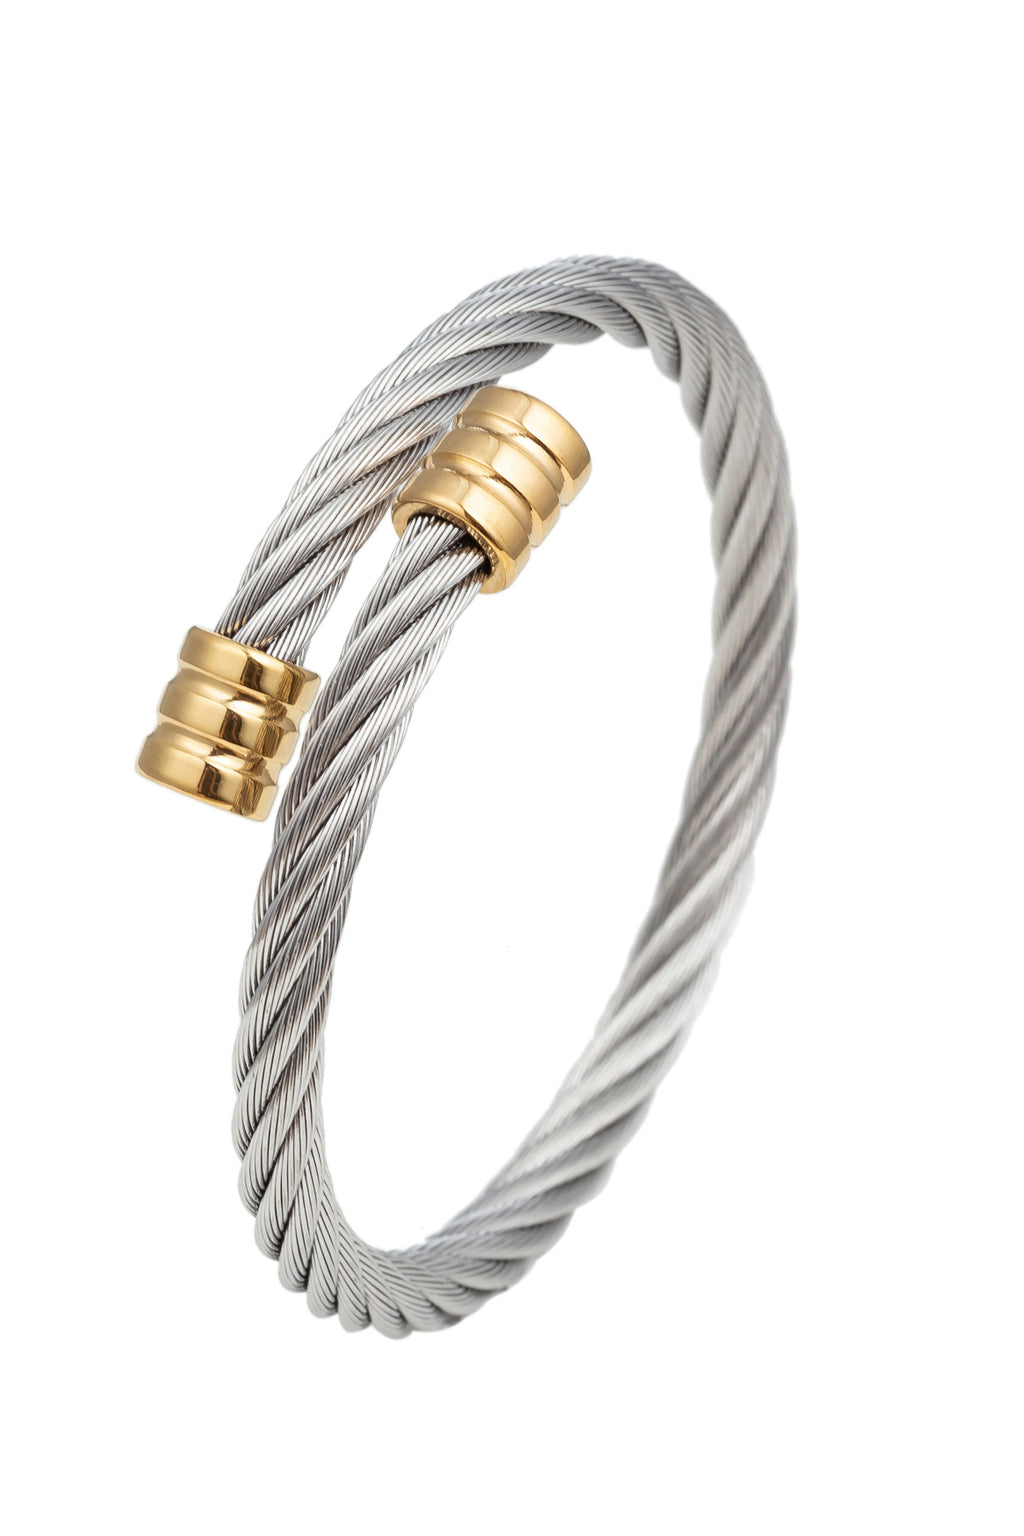 Silver wire cable titanium wrap cuff bracelet.